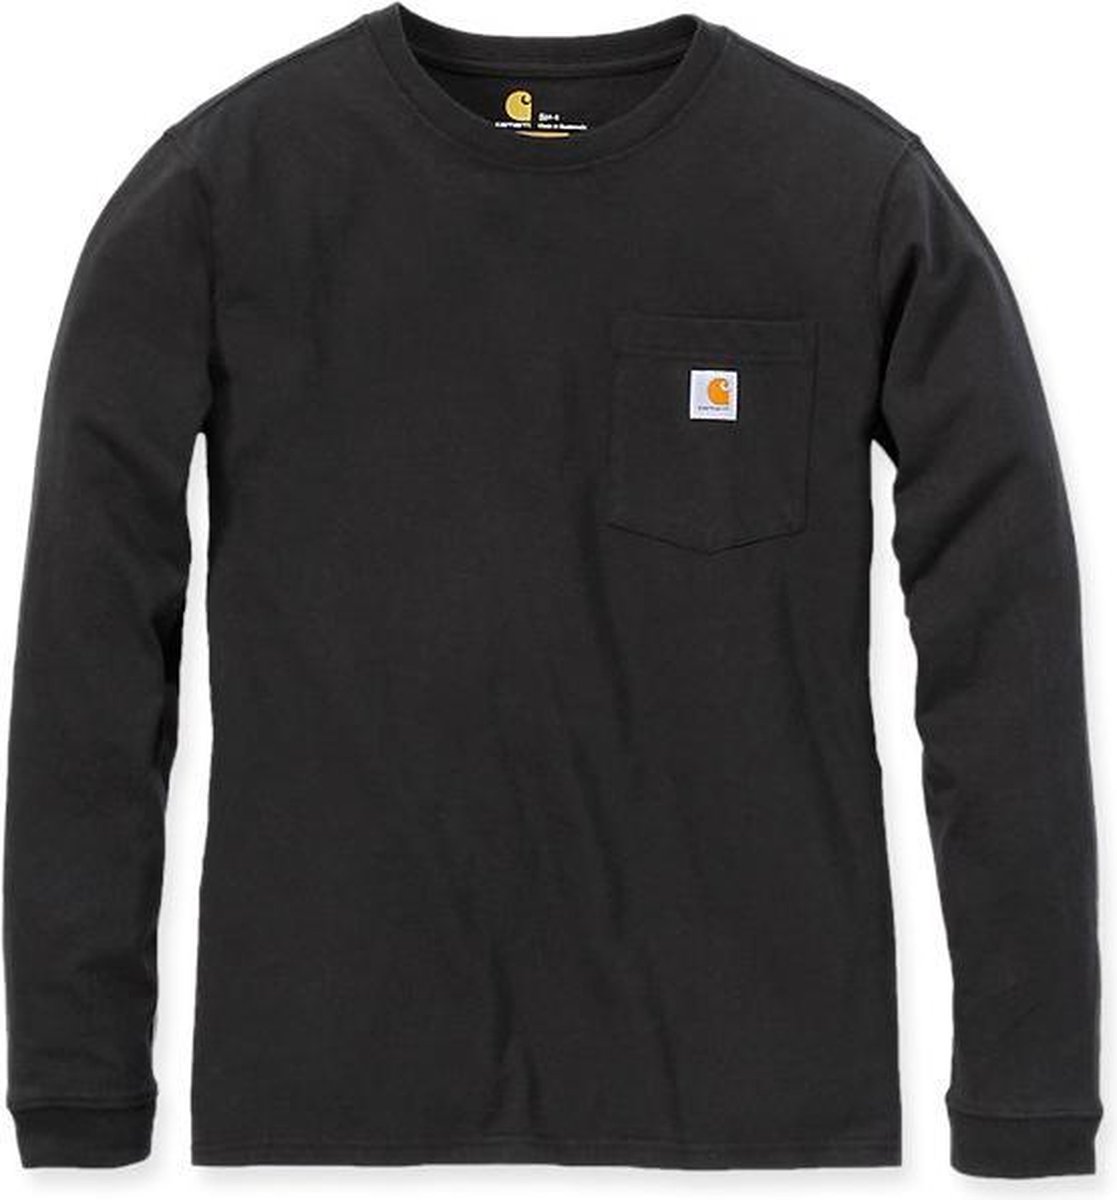 Carhartt 103244 Workwear Pocket Longsleeve T-Shirt - Original Fit - Black - L